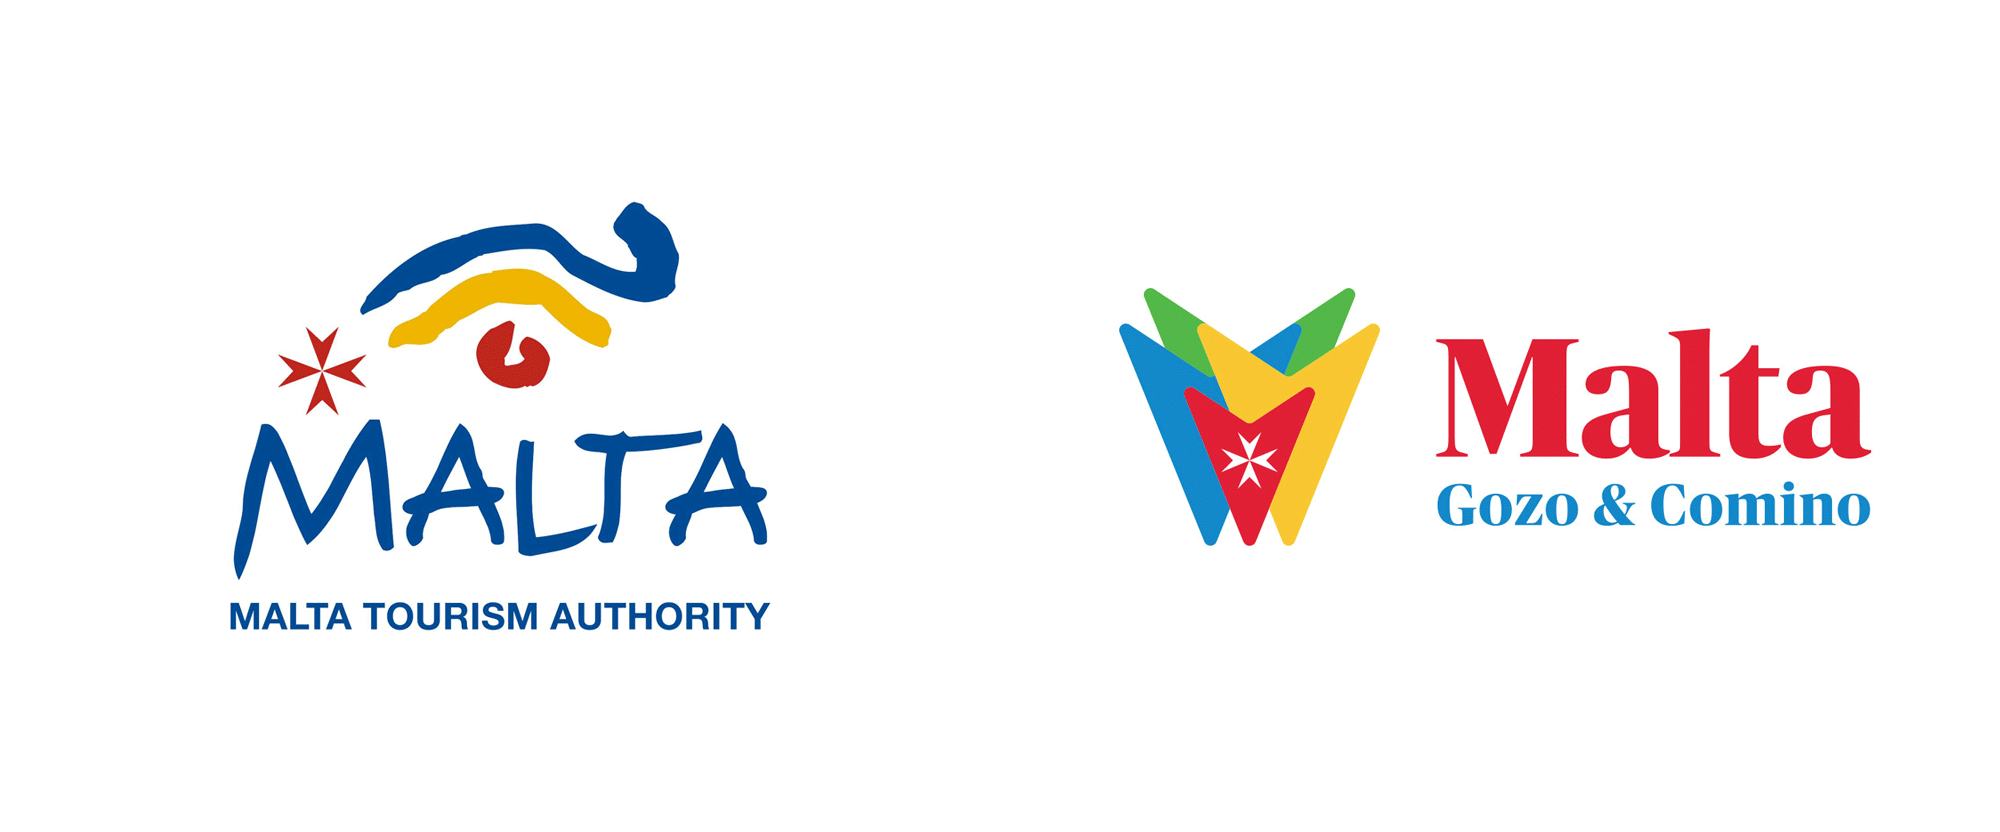 Malta Logo - Brand New: New Logo and Identity for Malta